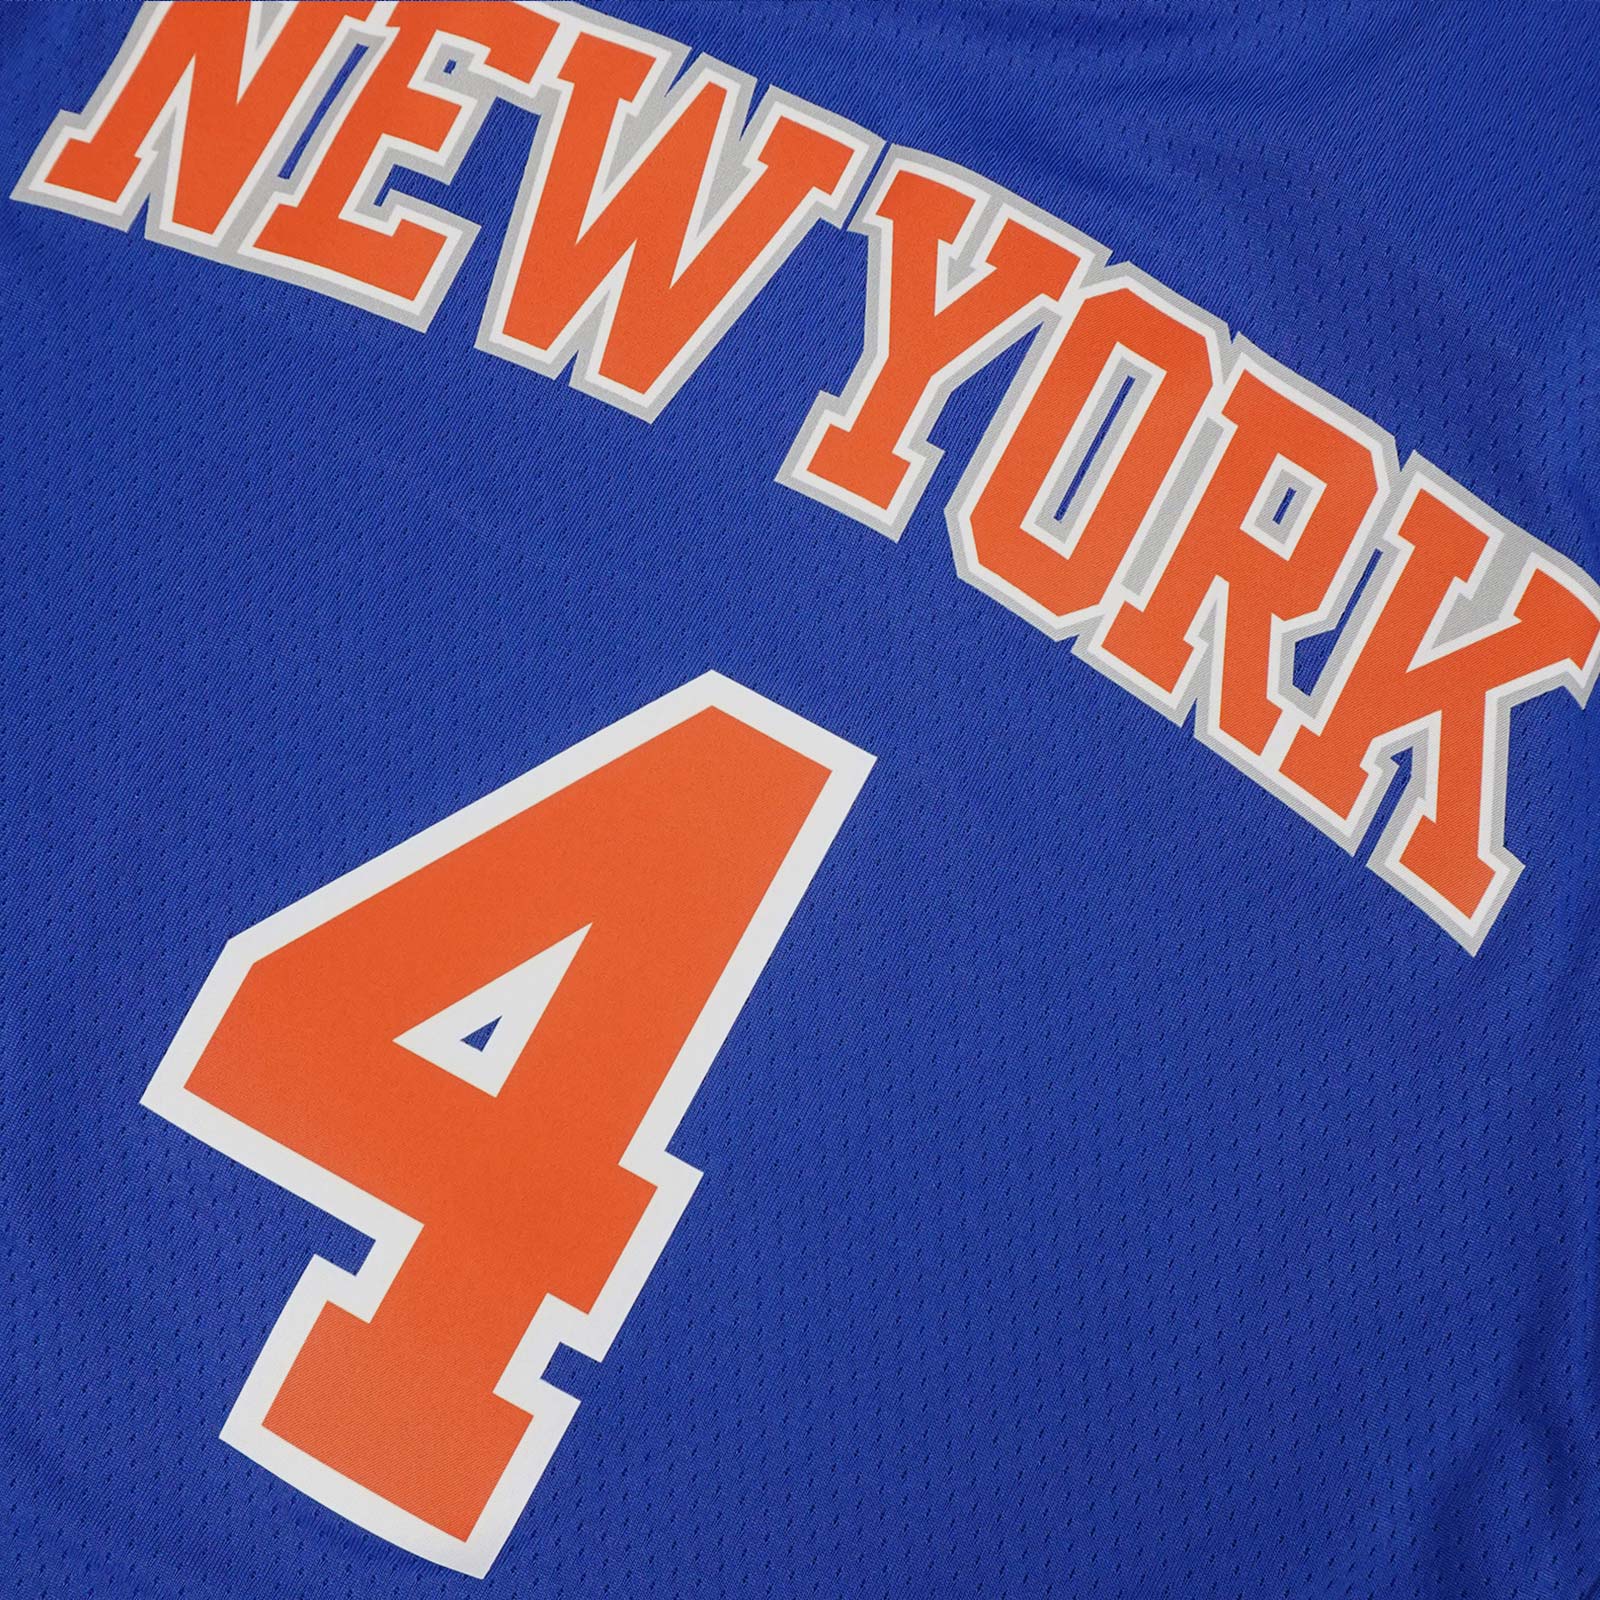 Derrick Rose New York Knicks Nike Unisex Swingman Jersey - Icon Edition -  Blue